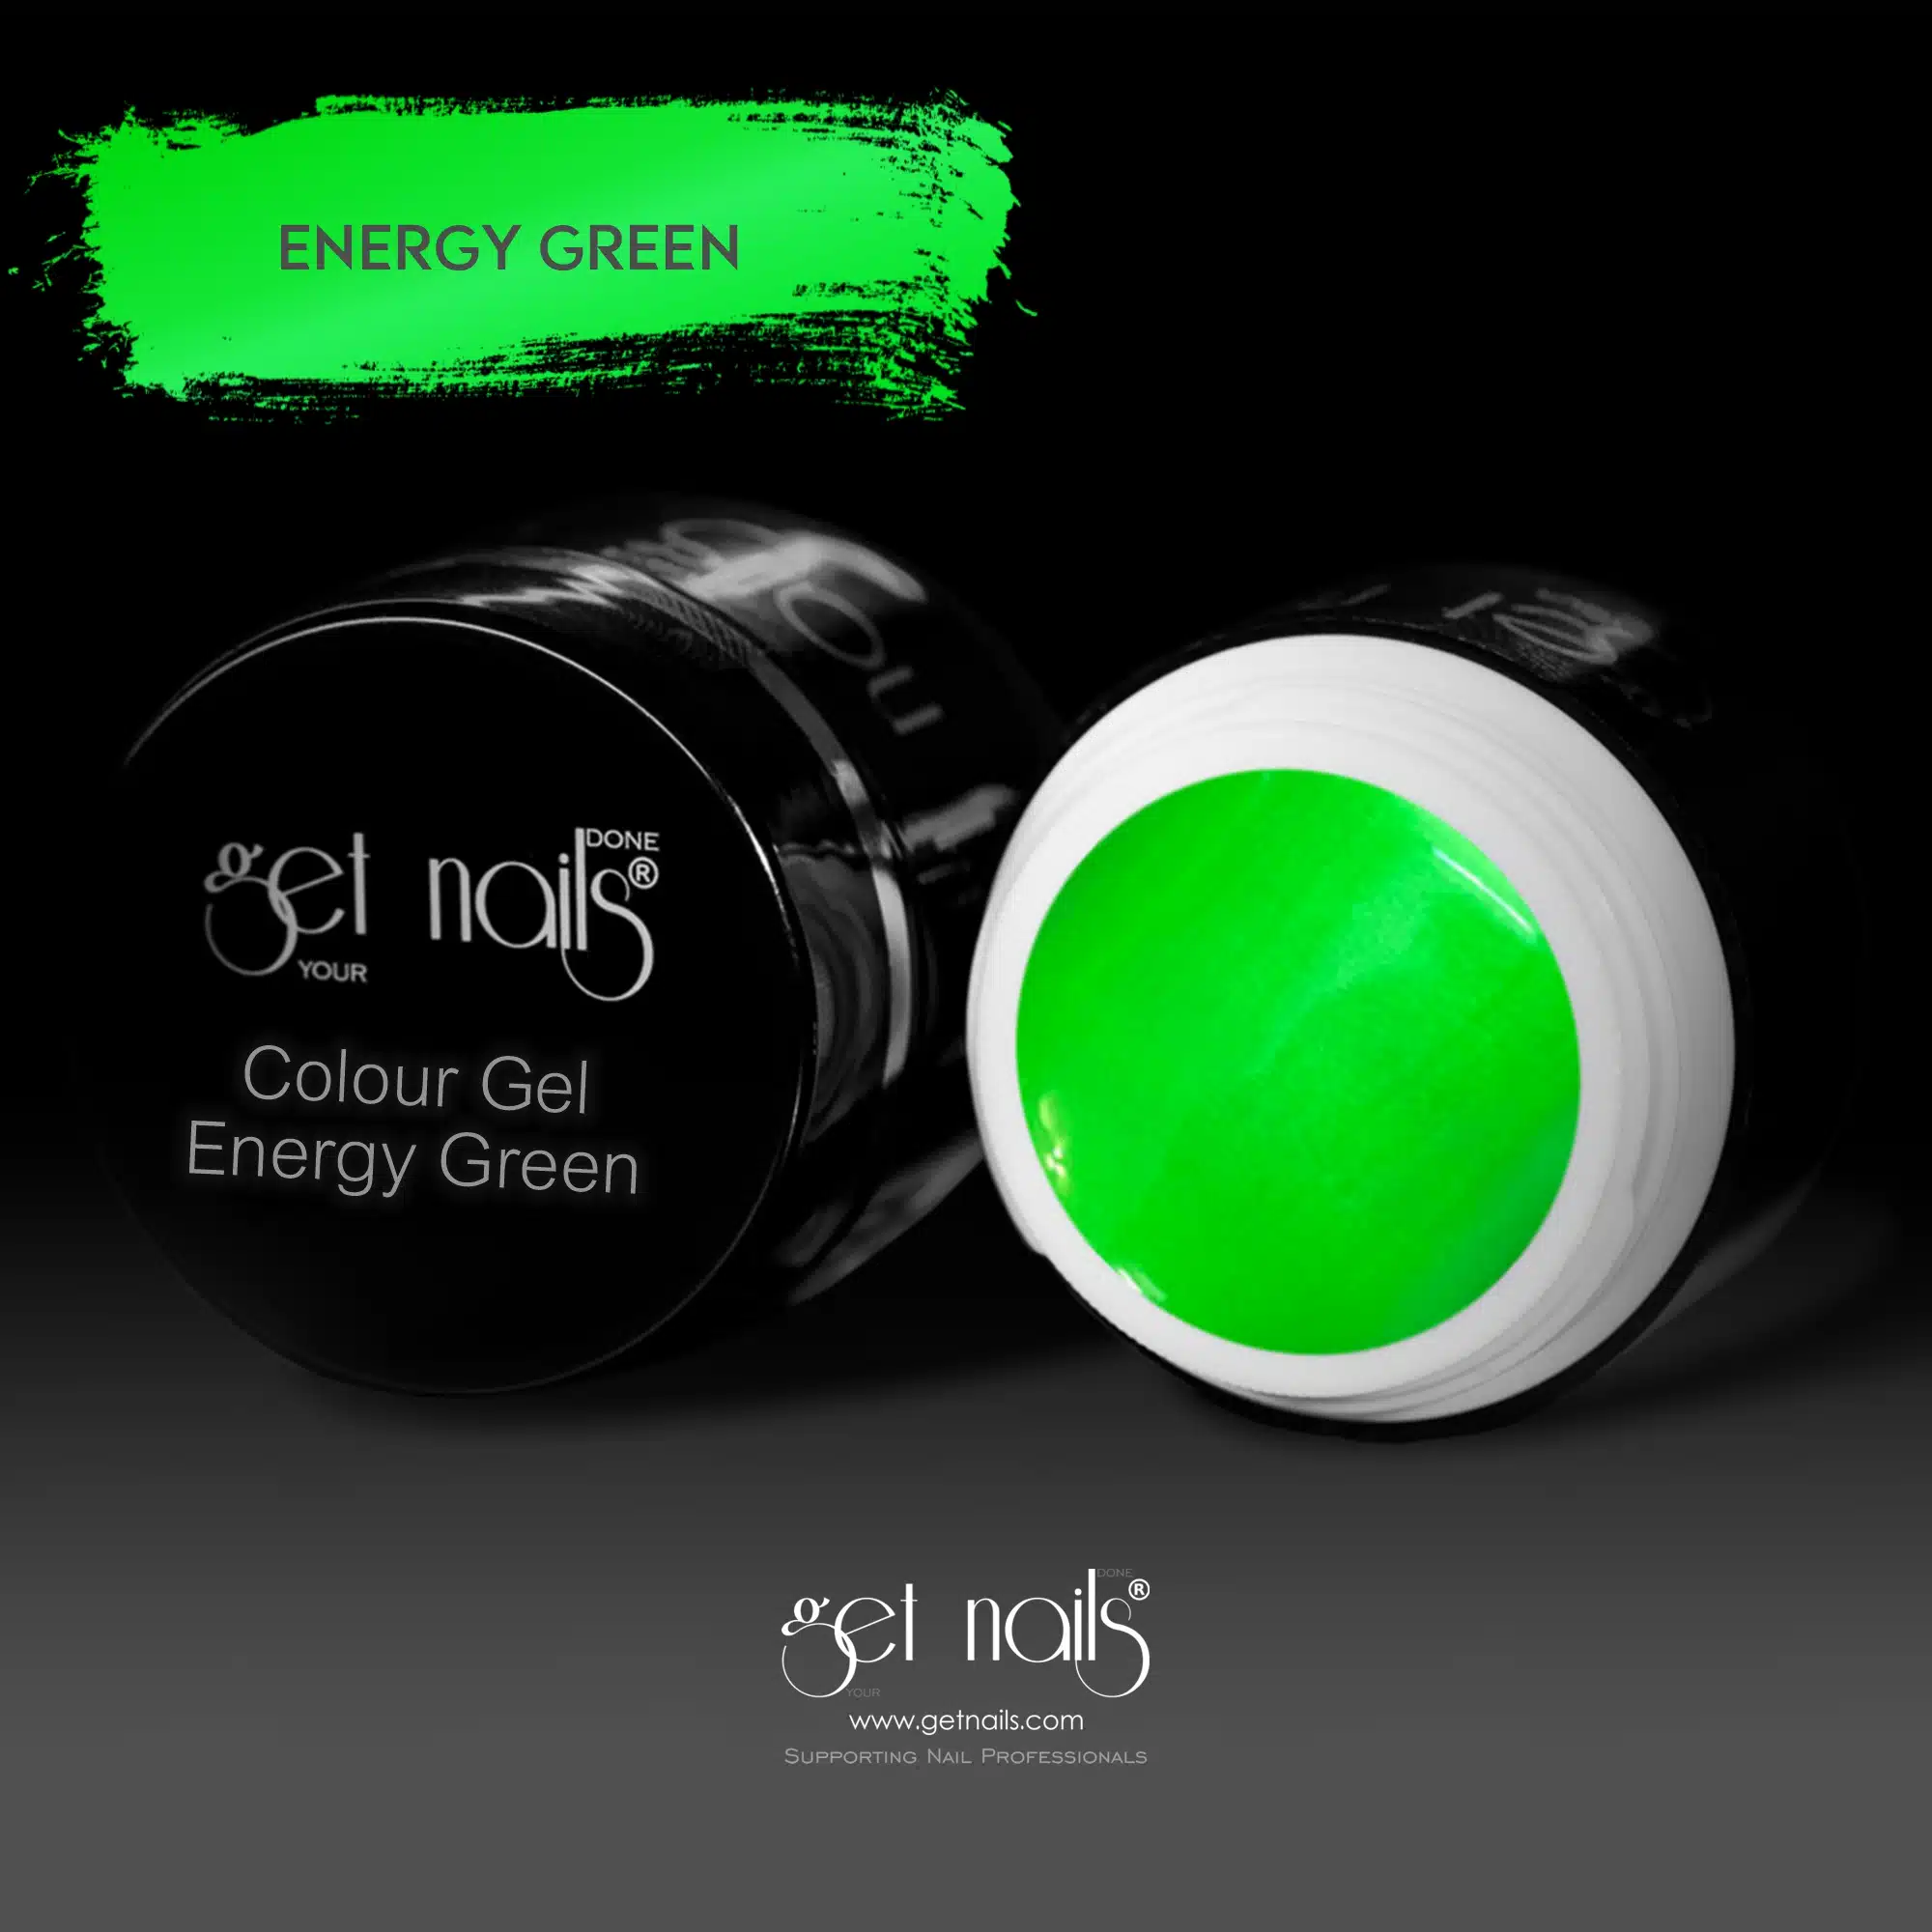 Get Nails Austria - Colour Gel Energy Green 5g